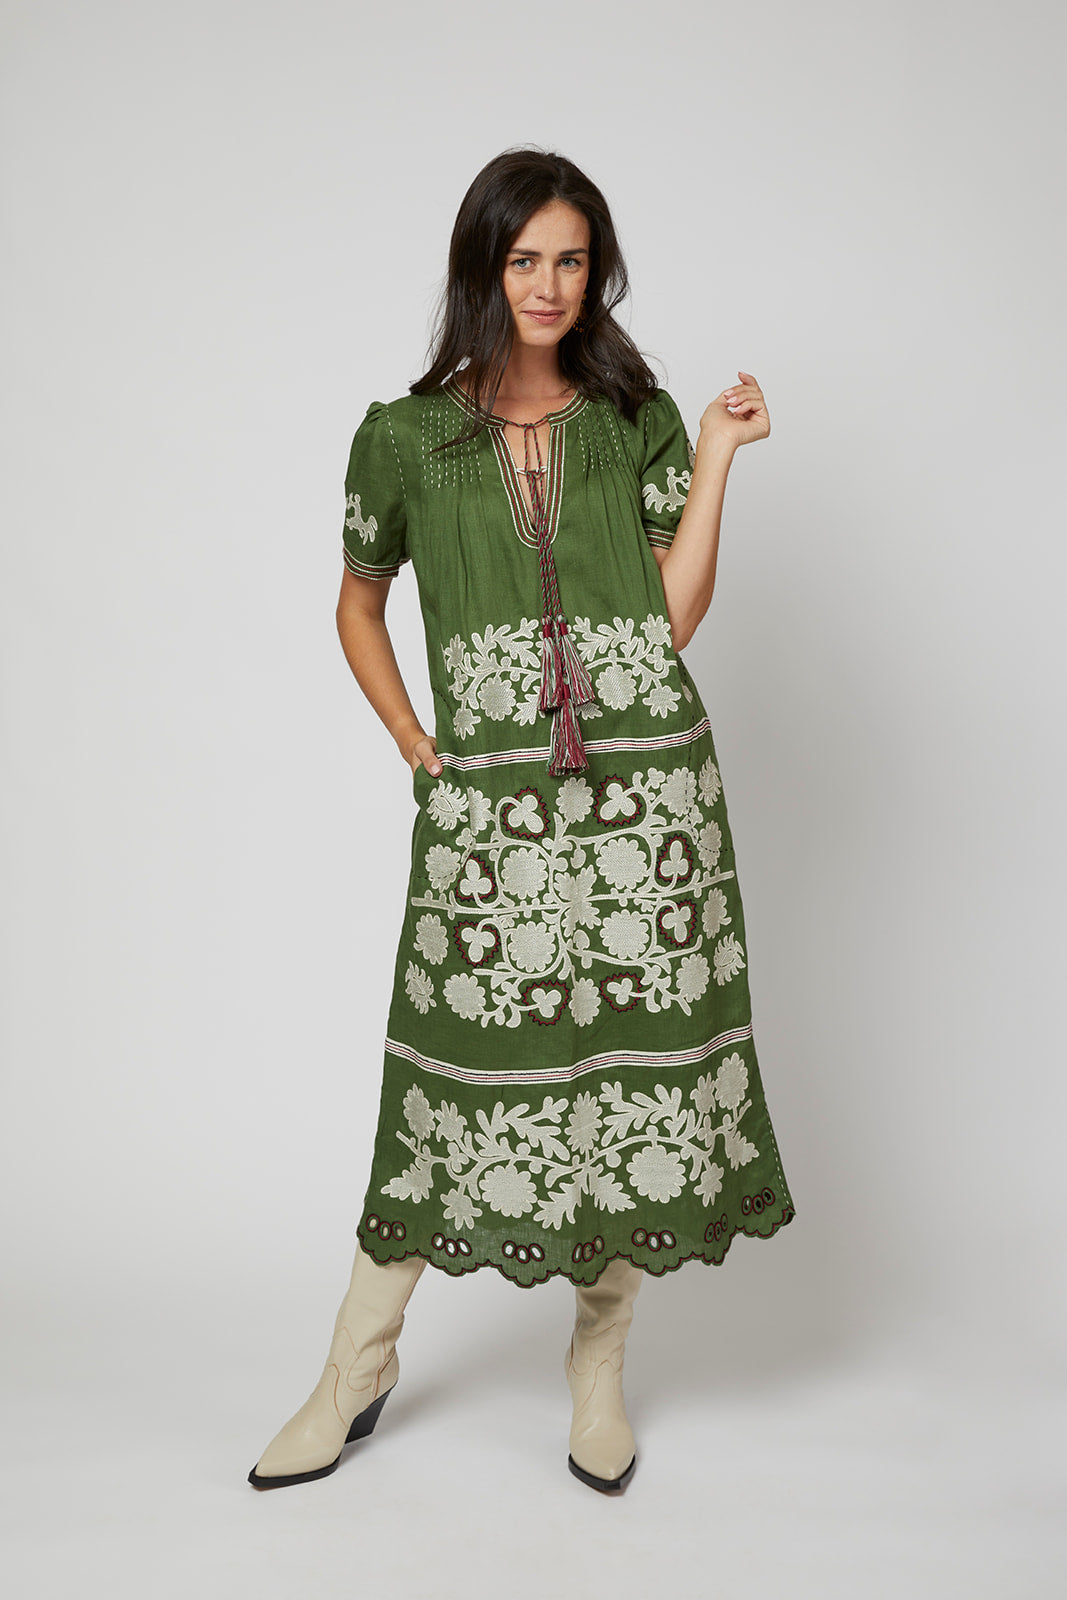 Natalia Ukrainian Embroidered  Dress - Olive Green, Ivory, Wine by Larkin Lane